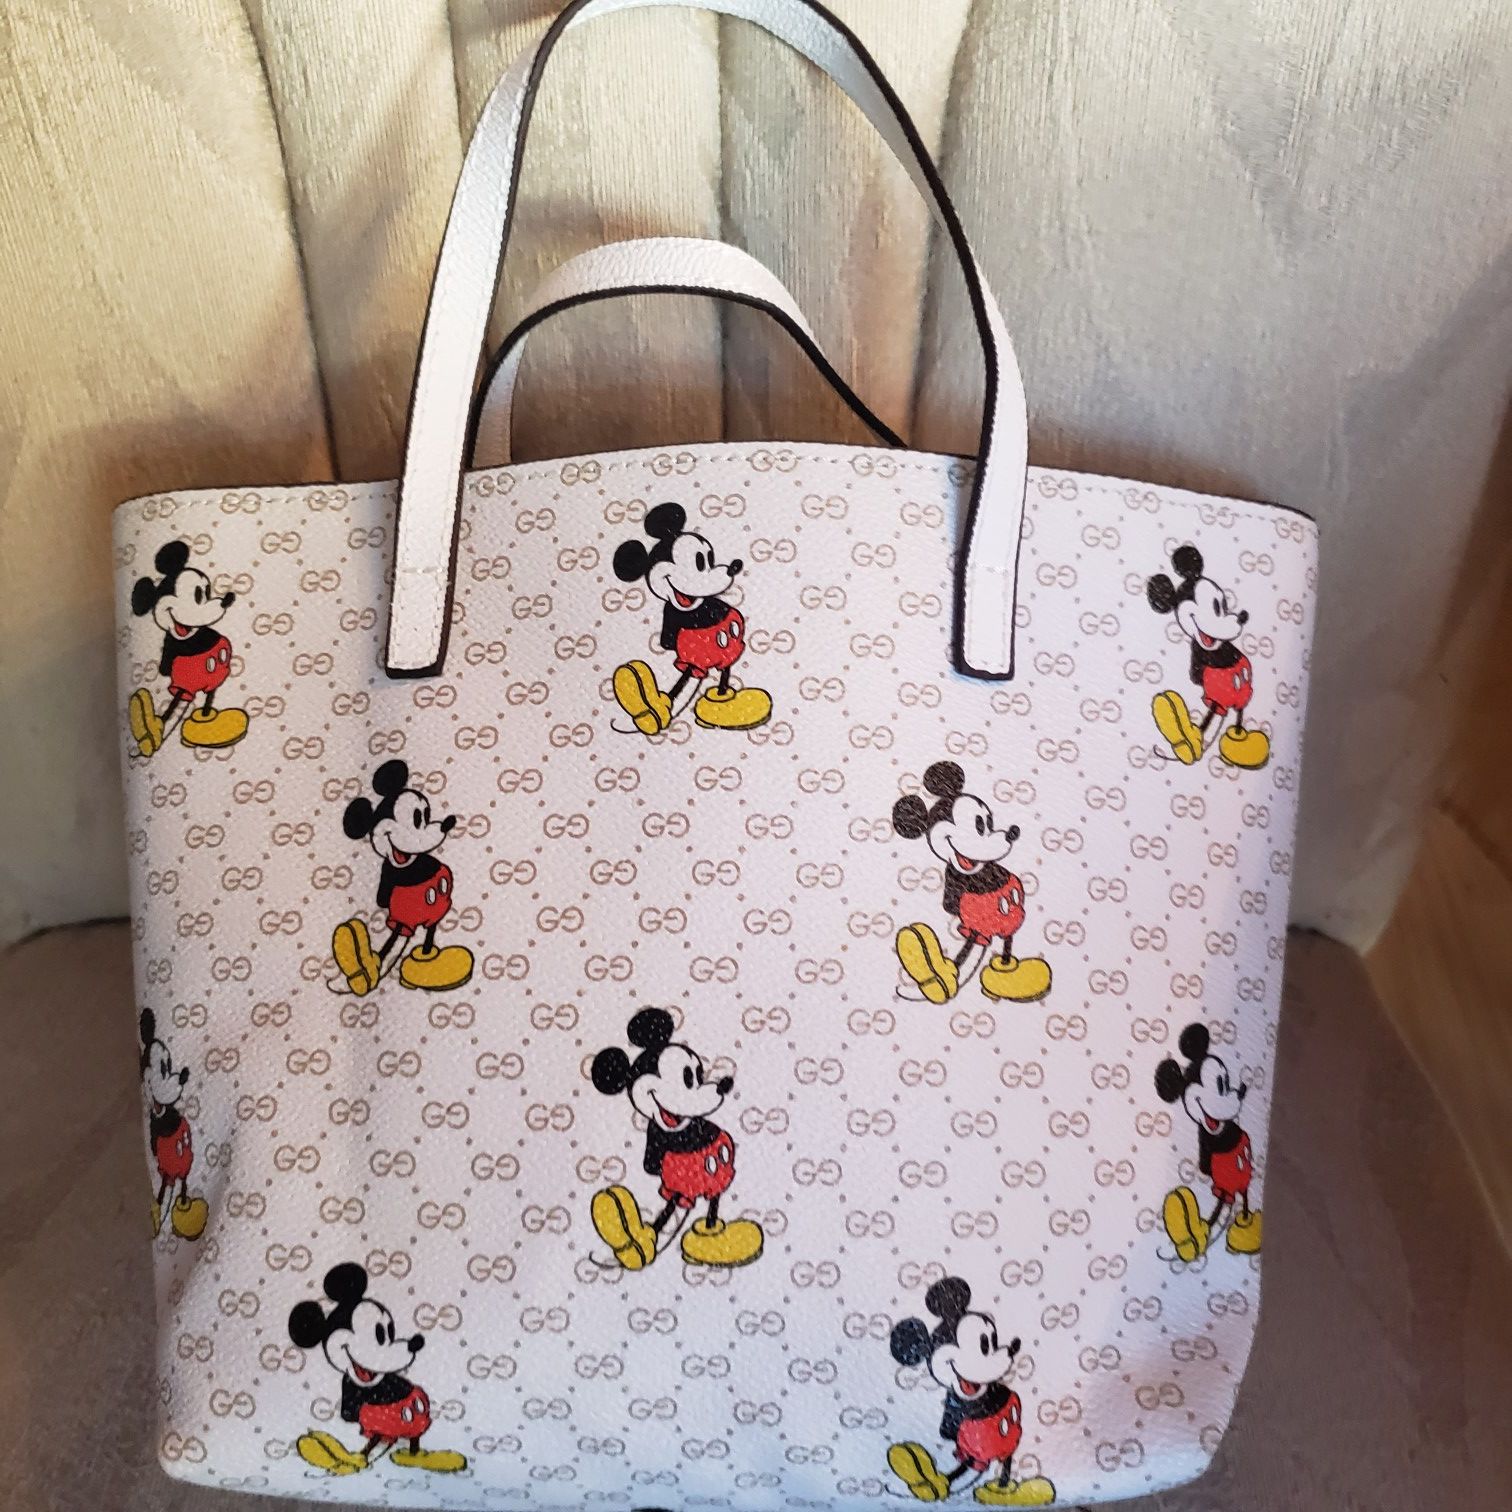 Mickey Mouse bag